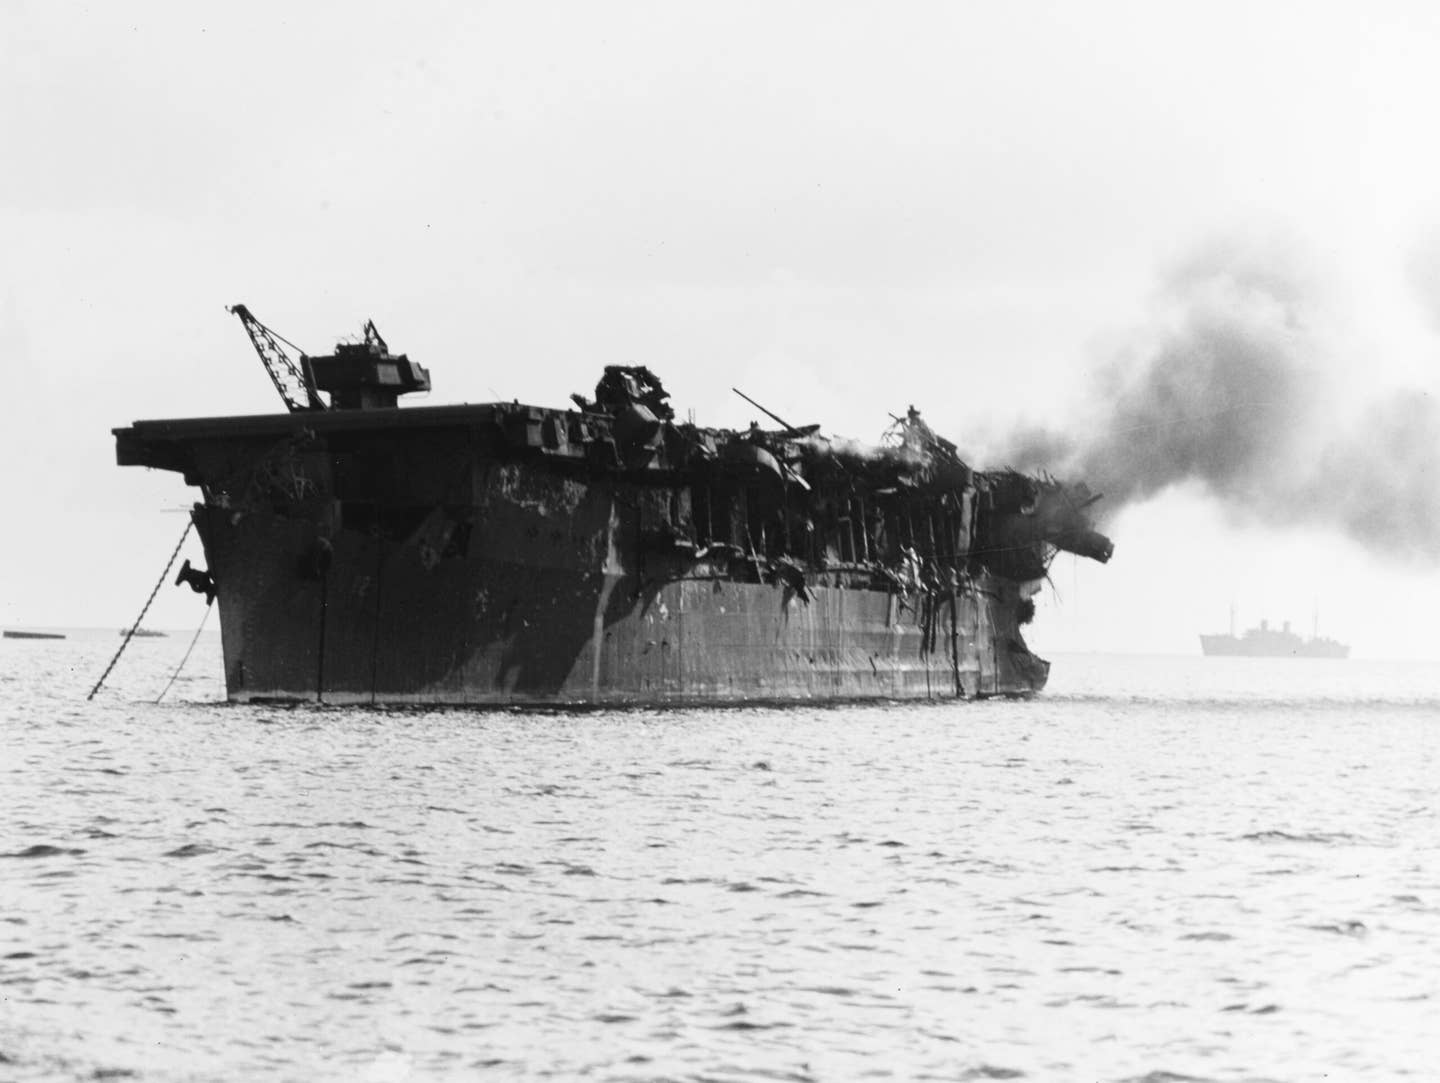 The charred hulk of the USS&nbsp;<em>Independence</em>&nbsp;(CVL-22) after the Able atomic bomb airburst test at Bikini Atoll on July 1, 1946. <em>U.S. Navy&nbsp;</em>